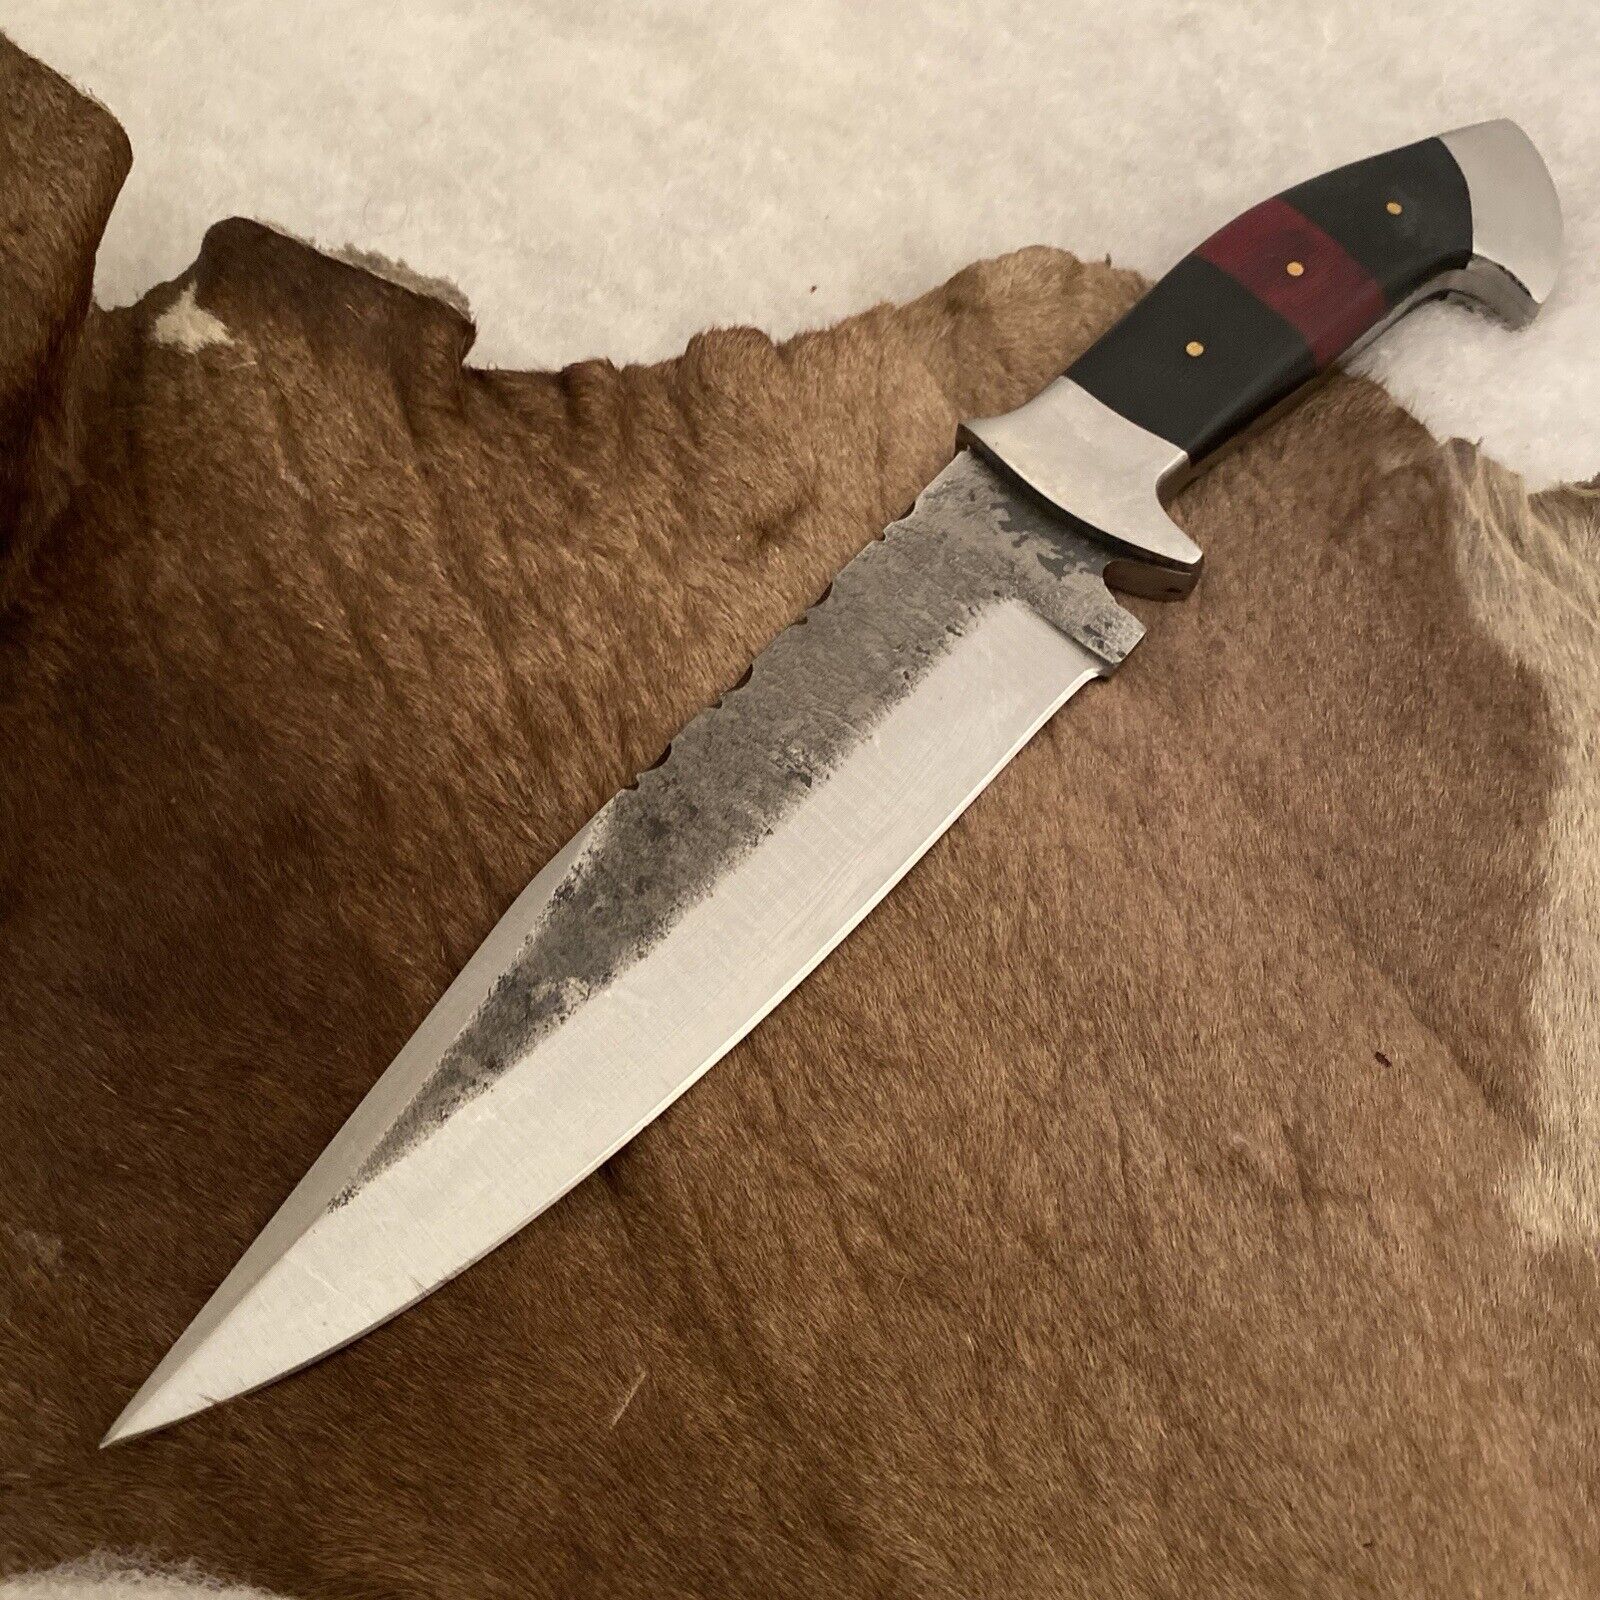 12 3/4” Handmade Leaf Spring Steel HUNTING Skinning CAMPING Knife KY-209